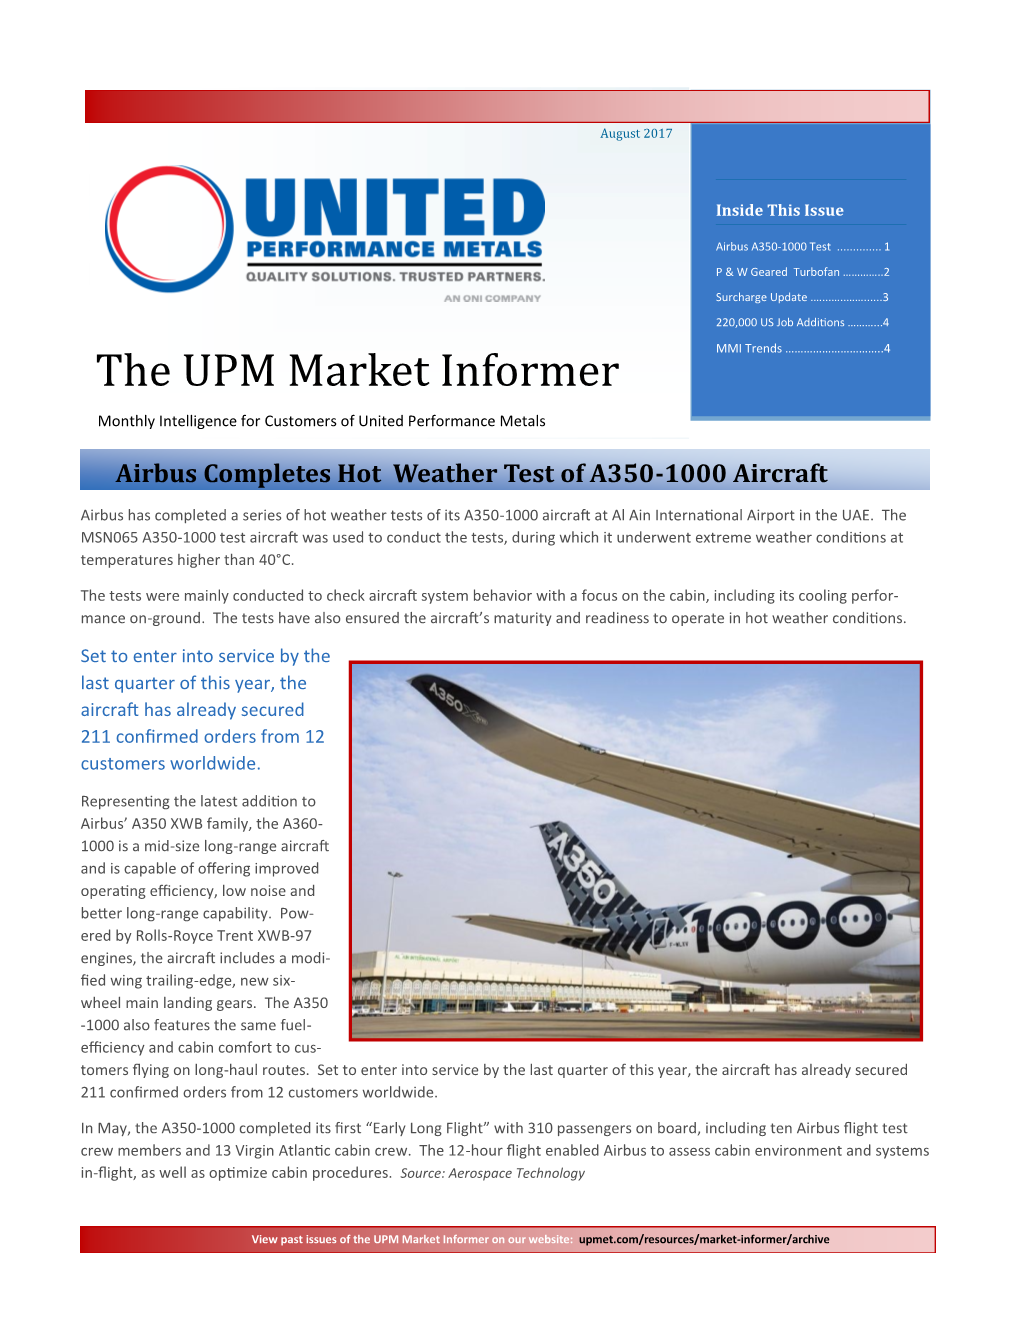 The UPM Market Informer